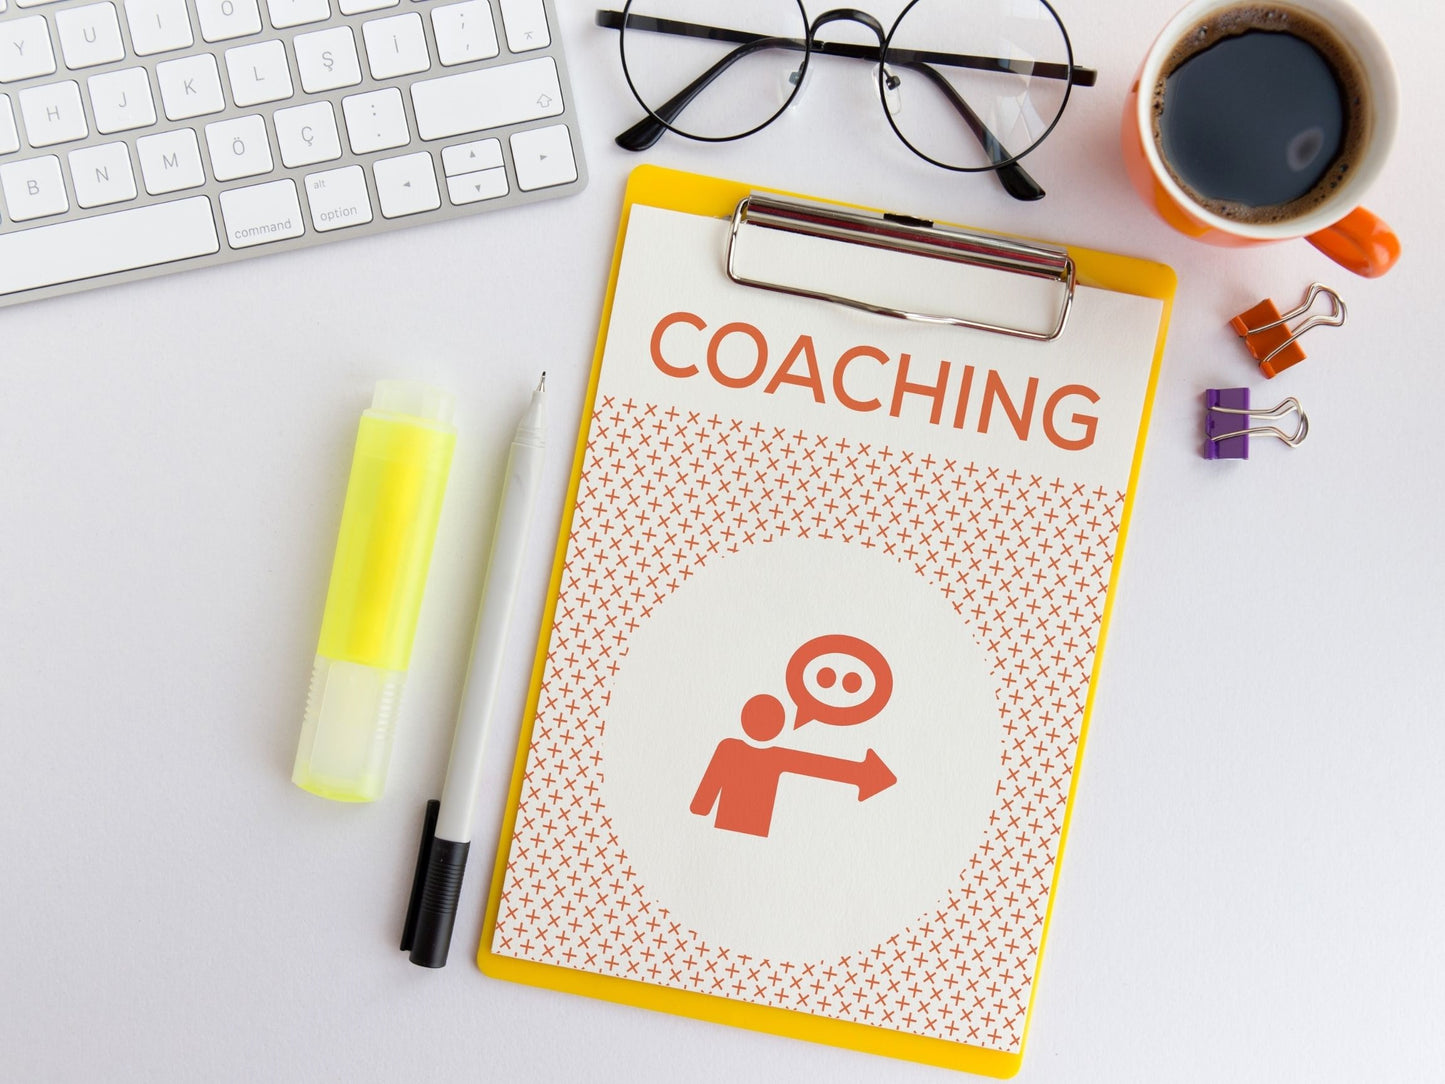 Business/Life Coaching & Mentoring